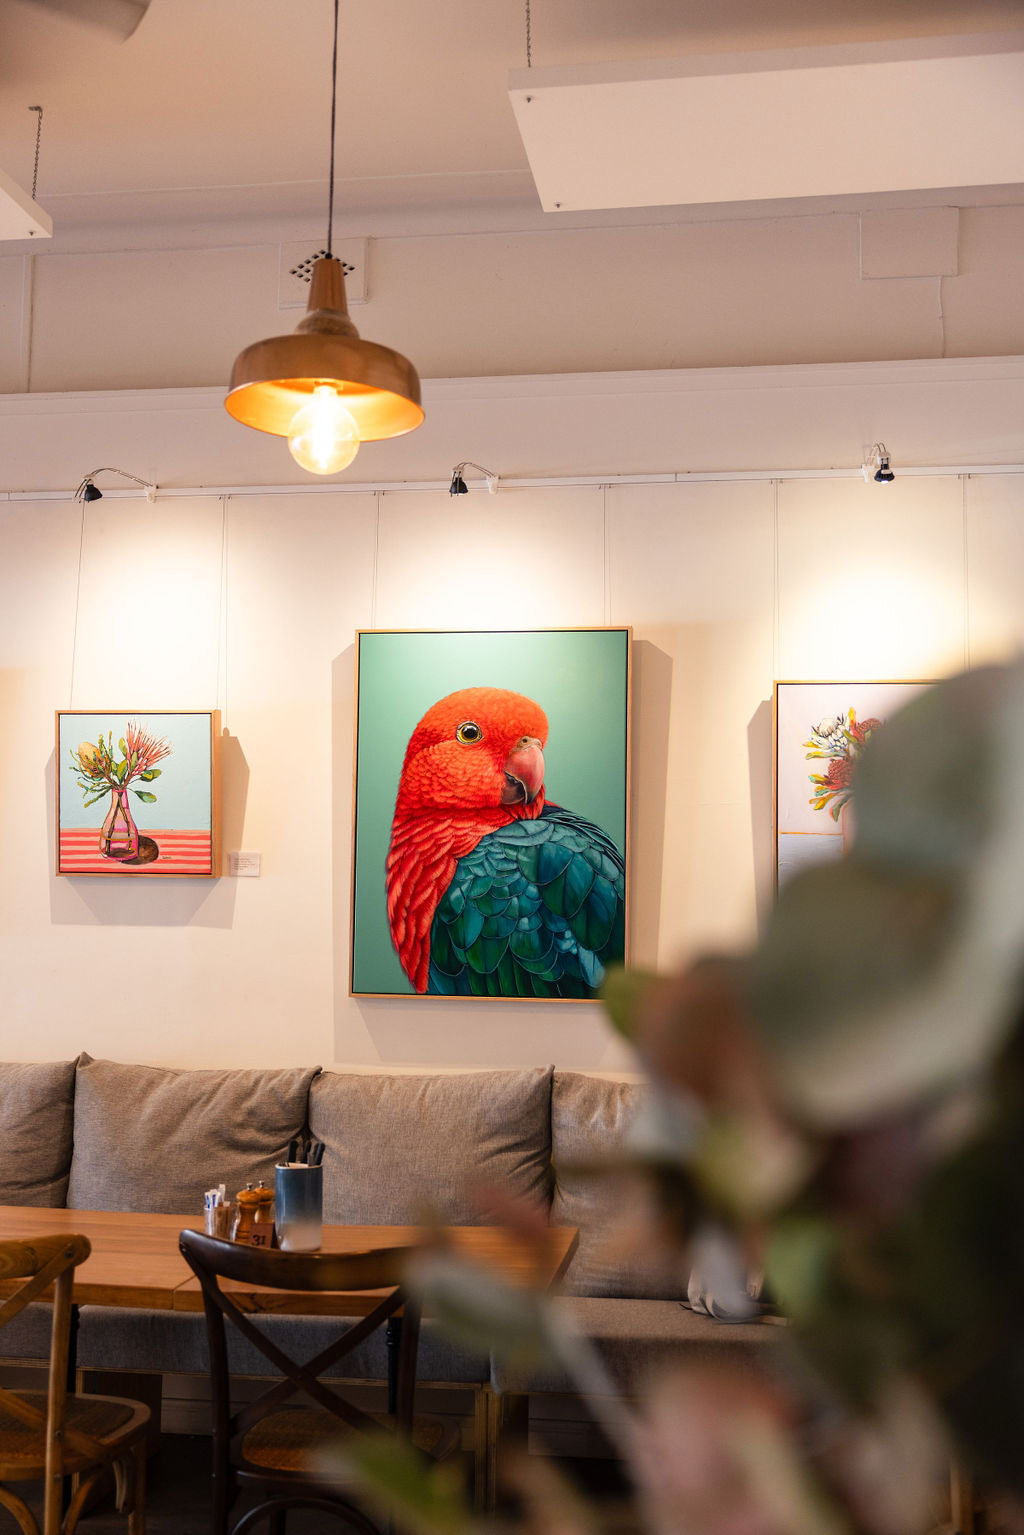 &#39;Red&#39; the King Parrot framed original artwork